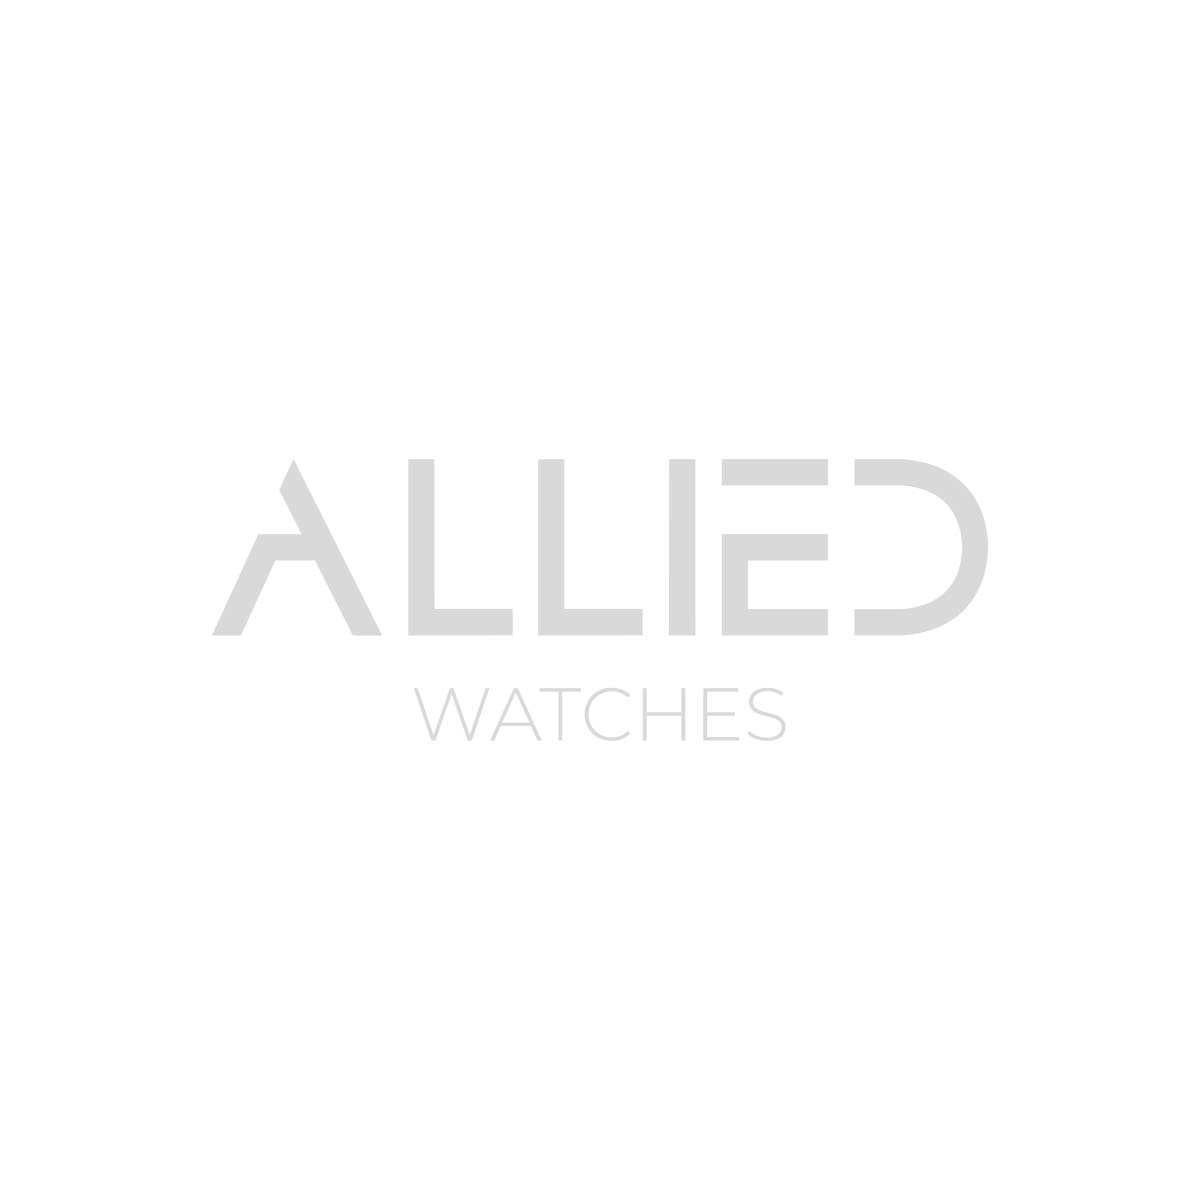 Allied Watches